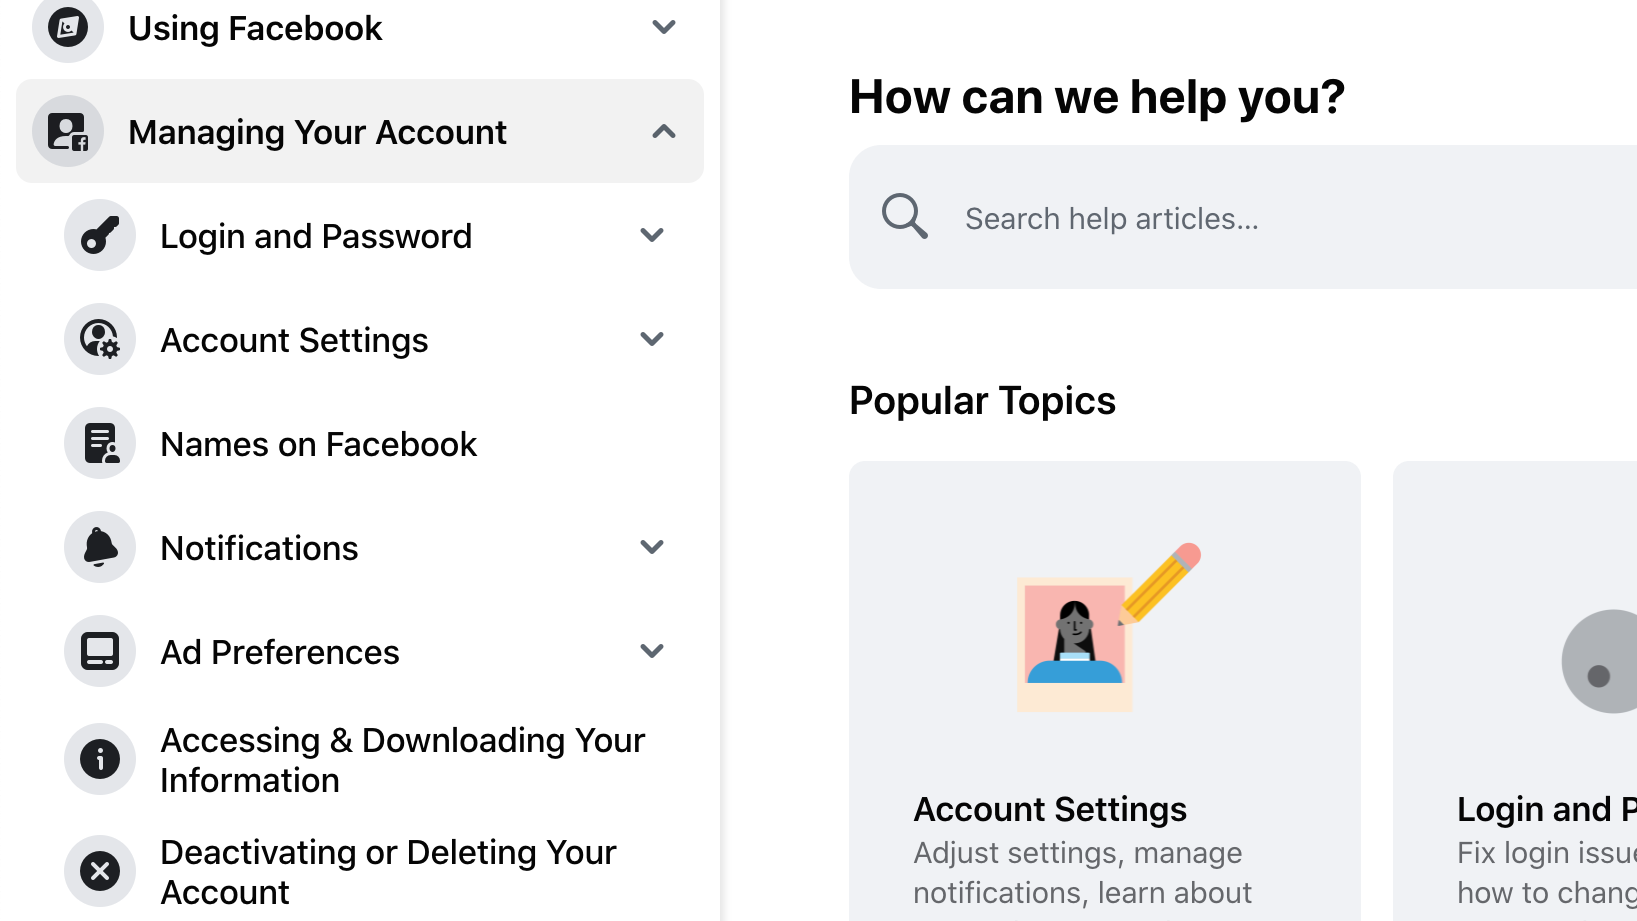 Managing your Facebook account